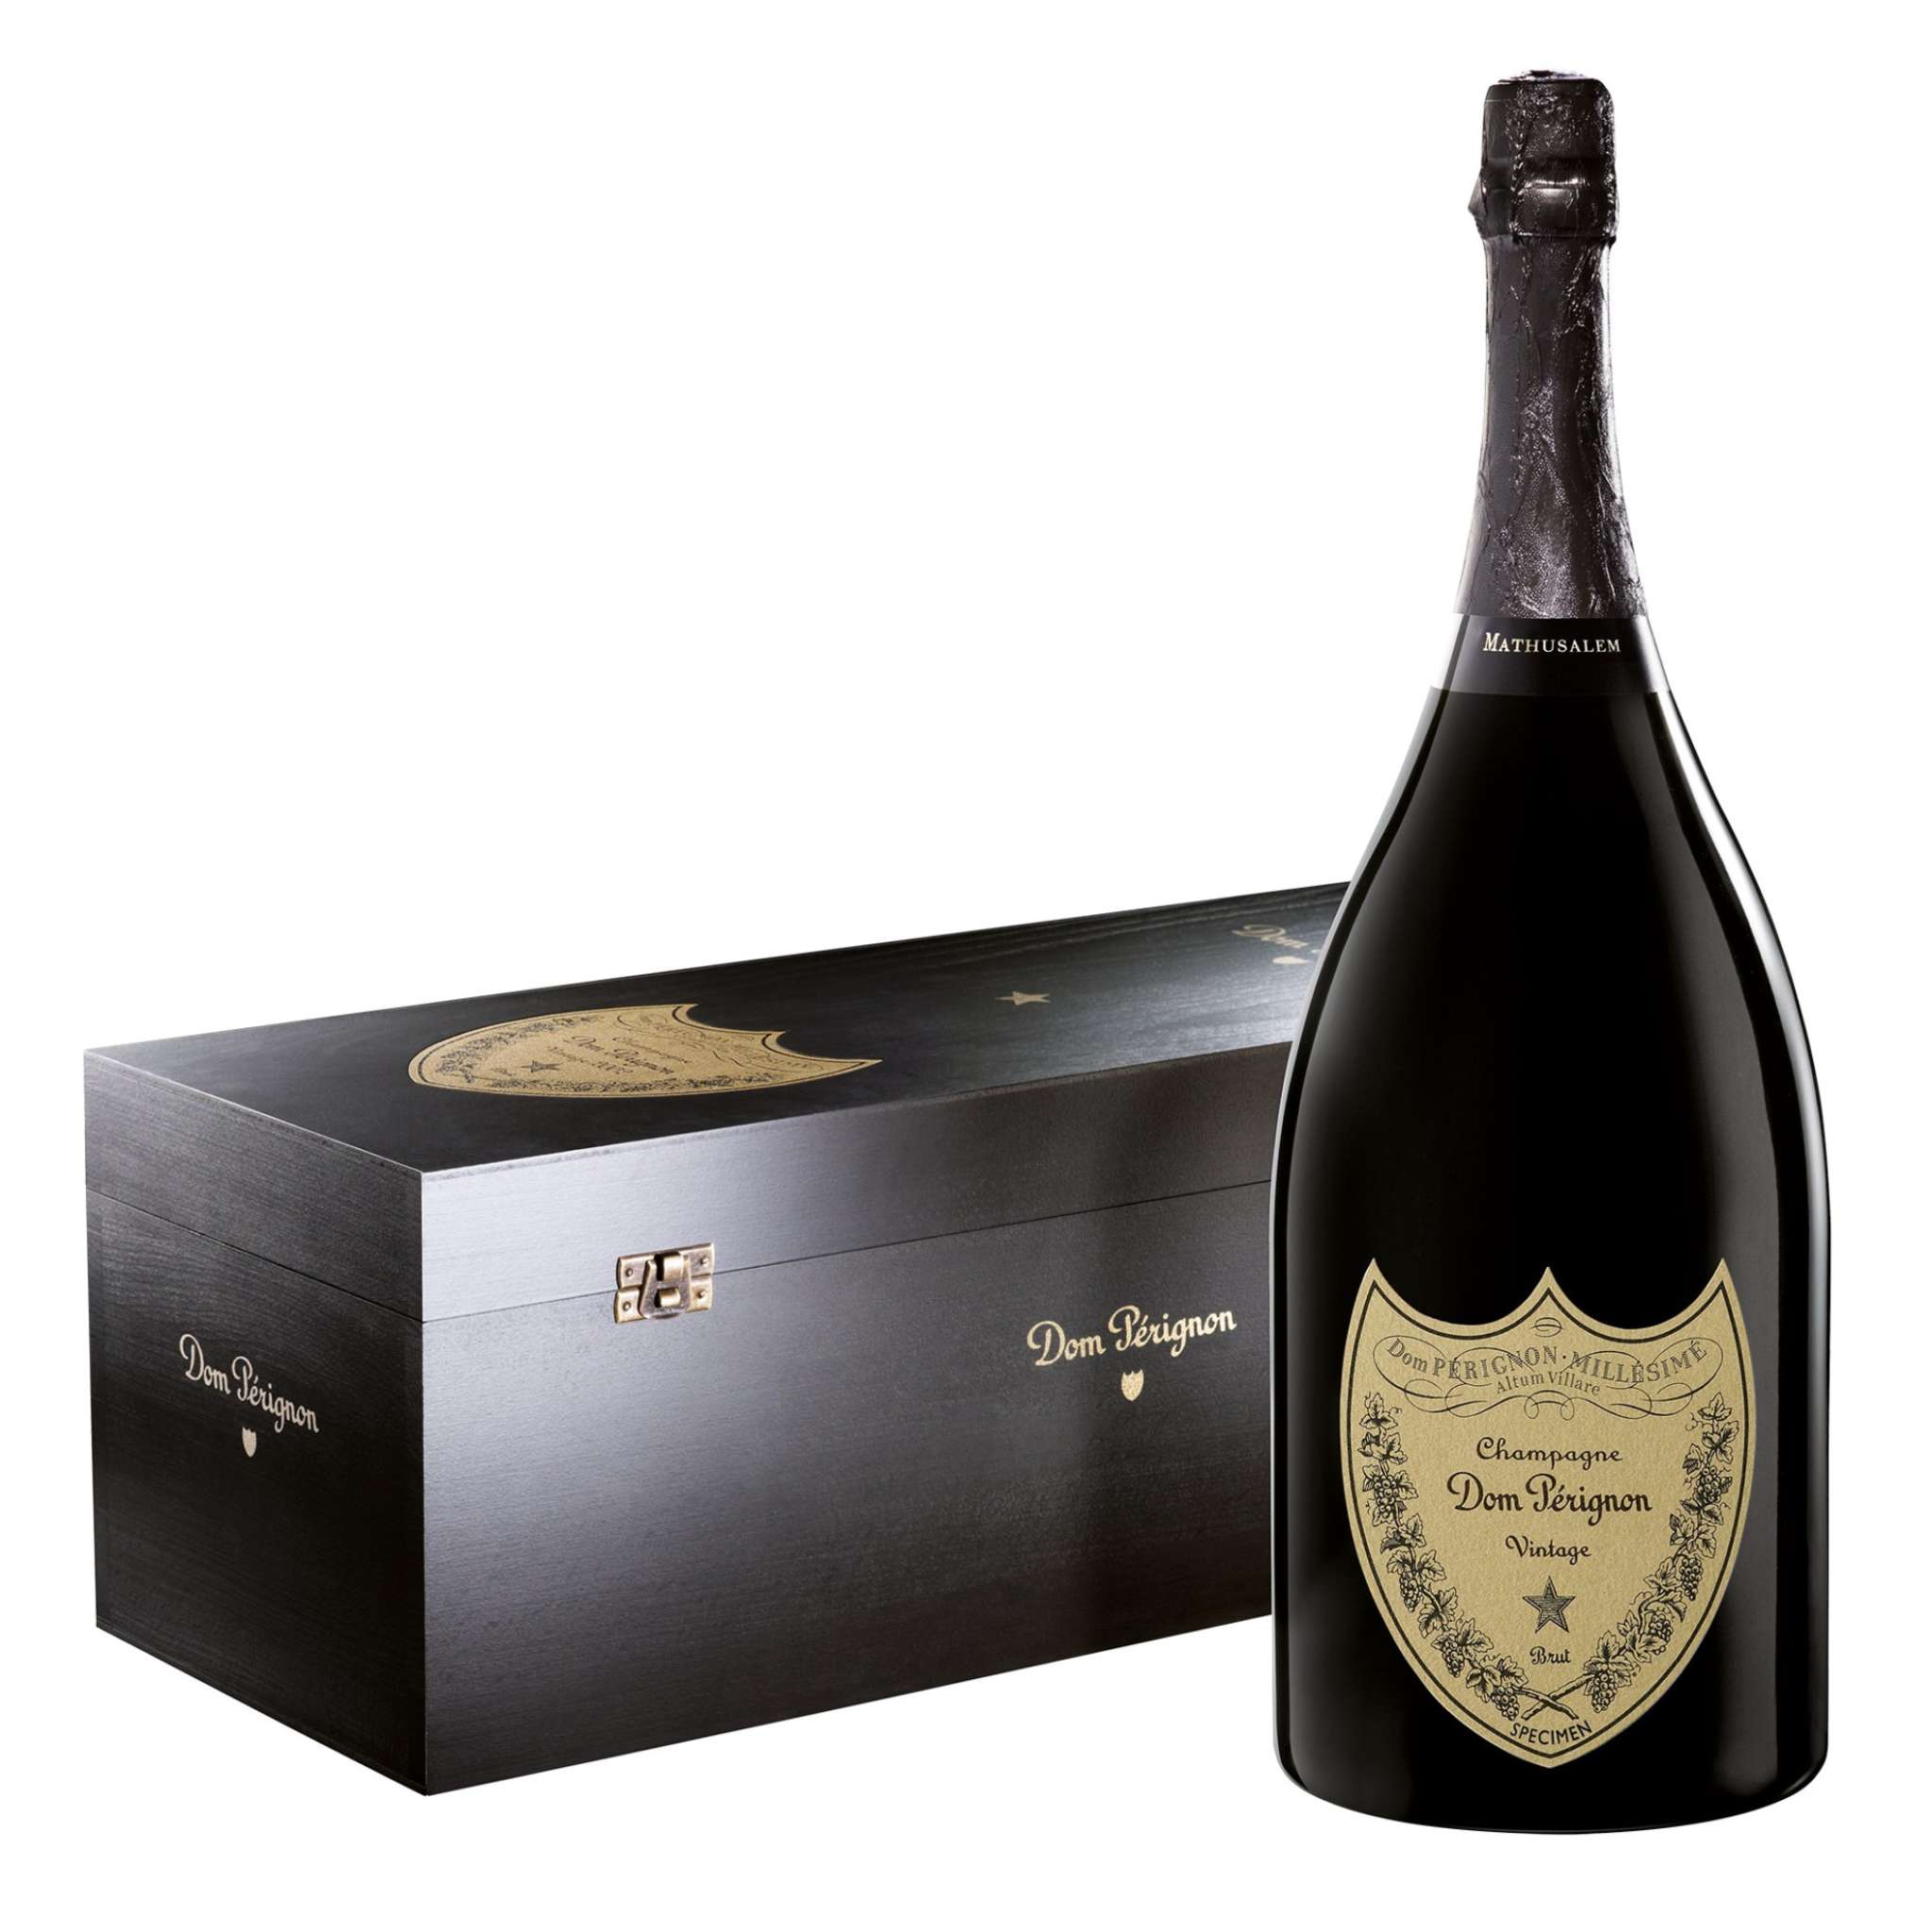 Dom perignon blanc brut mathusalem bois wood box champagne pinot noir chardonnay luxury limited edition 6 l.